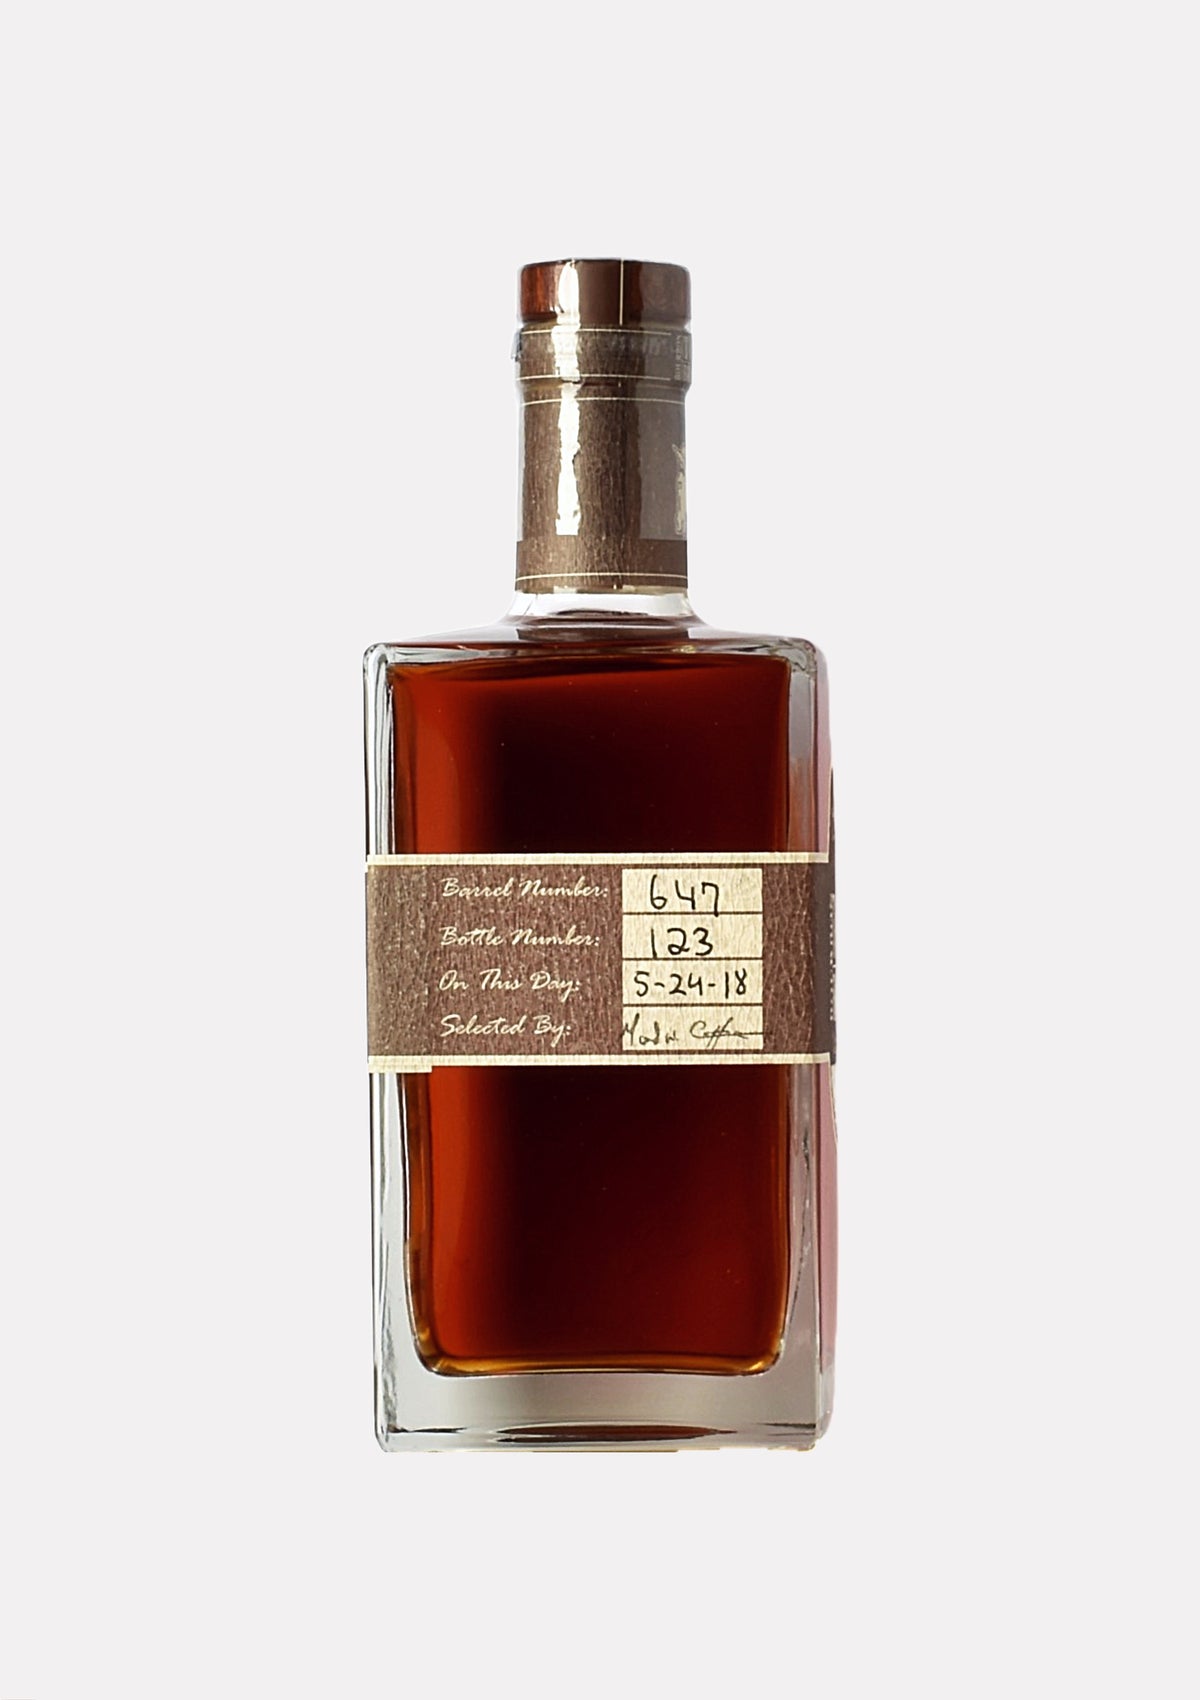 Town Branch Single Barrel Kentucky Straight Bourbon Whiskey 121.5 Proof